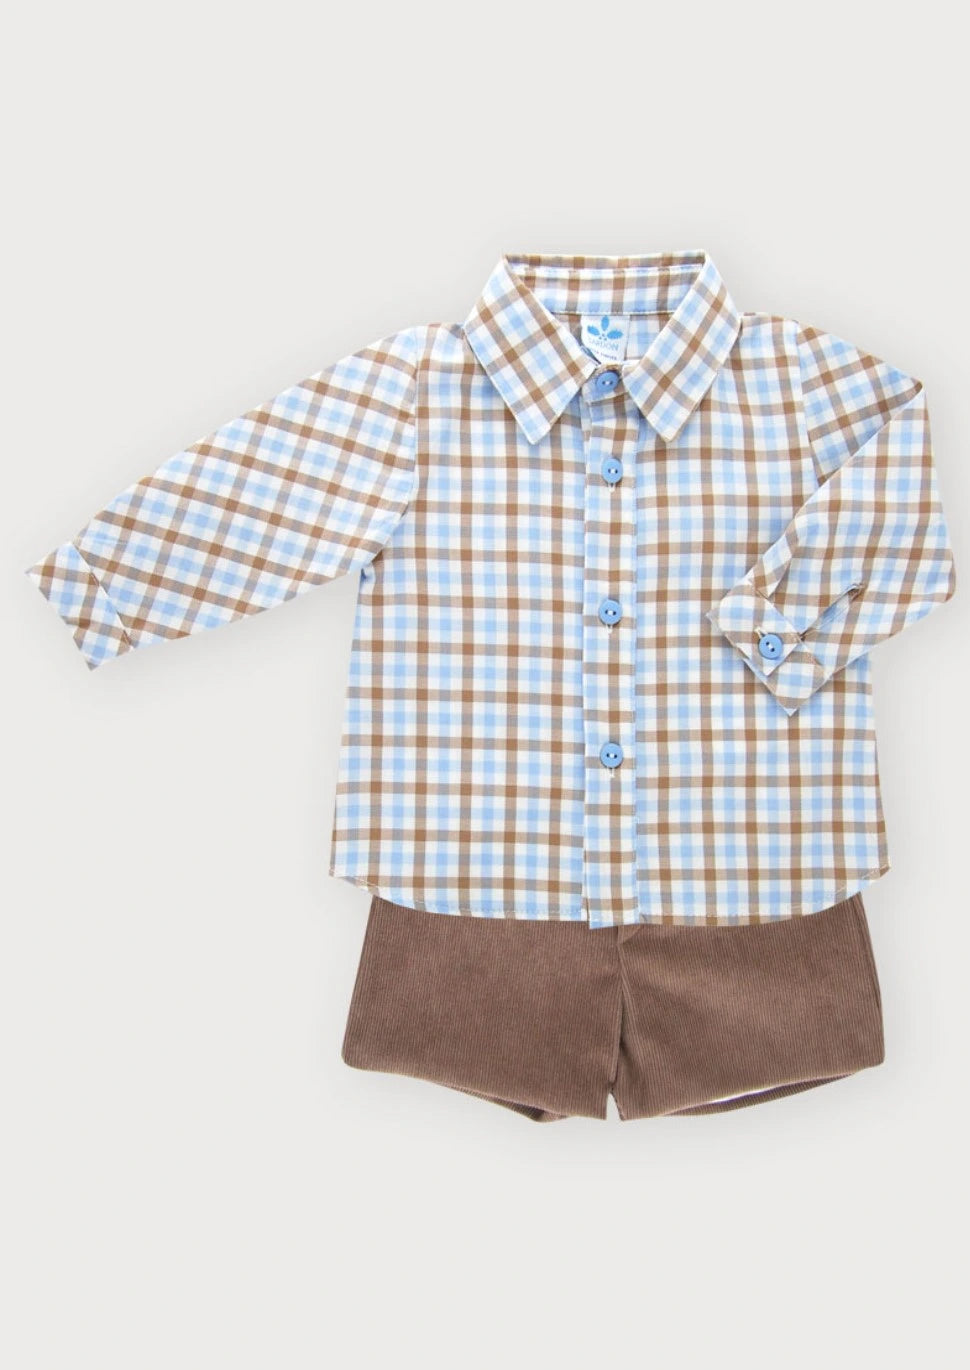 brown and blue check shirt set by sardon